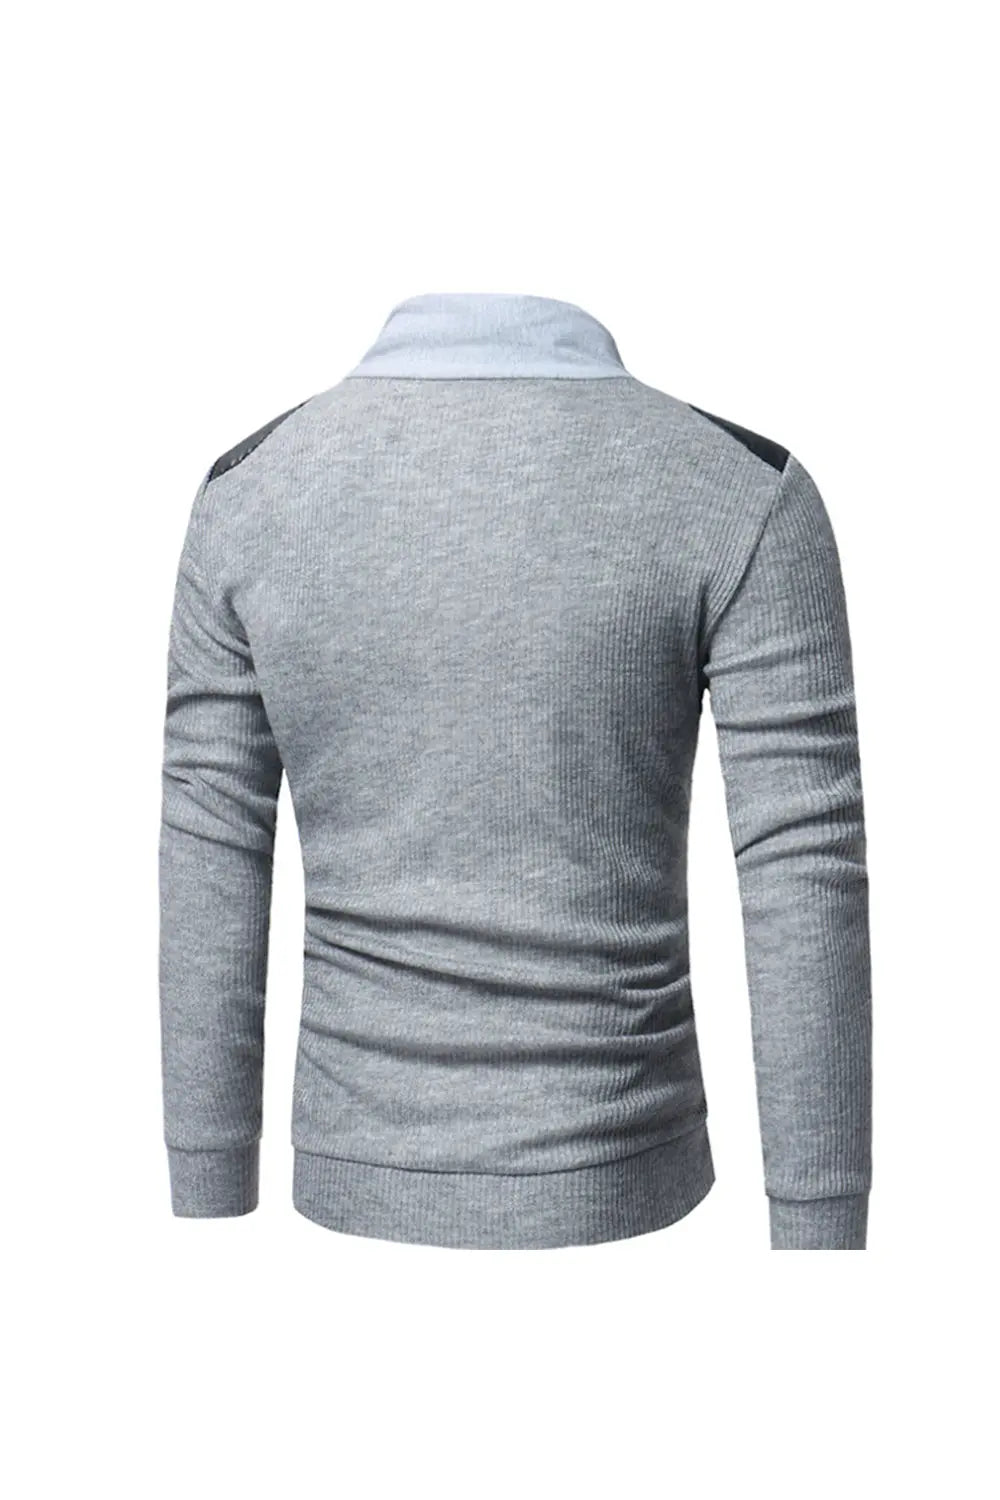 Crewneck Sweatshirt - Gray - Strange Clothes